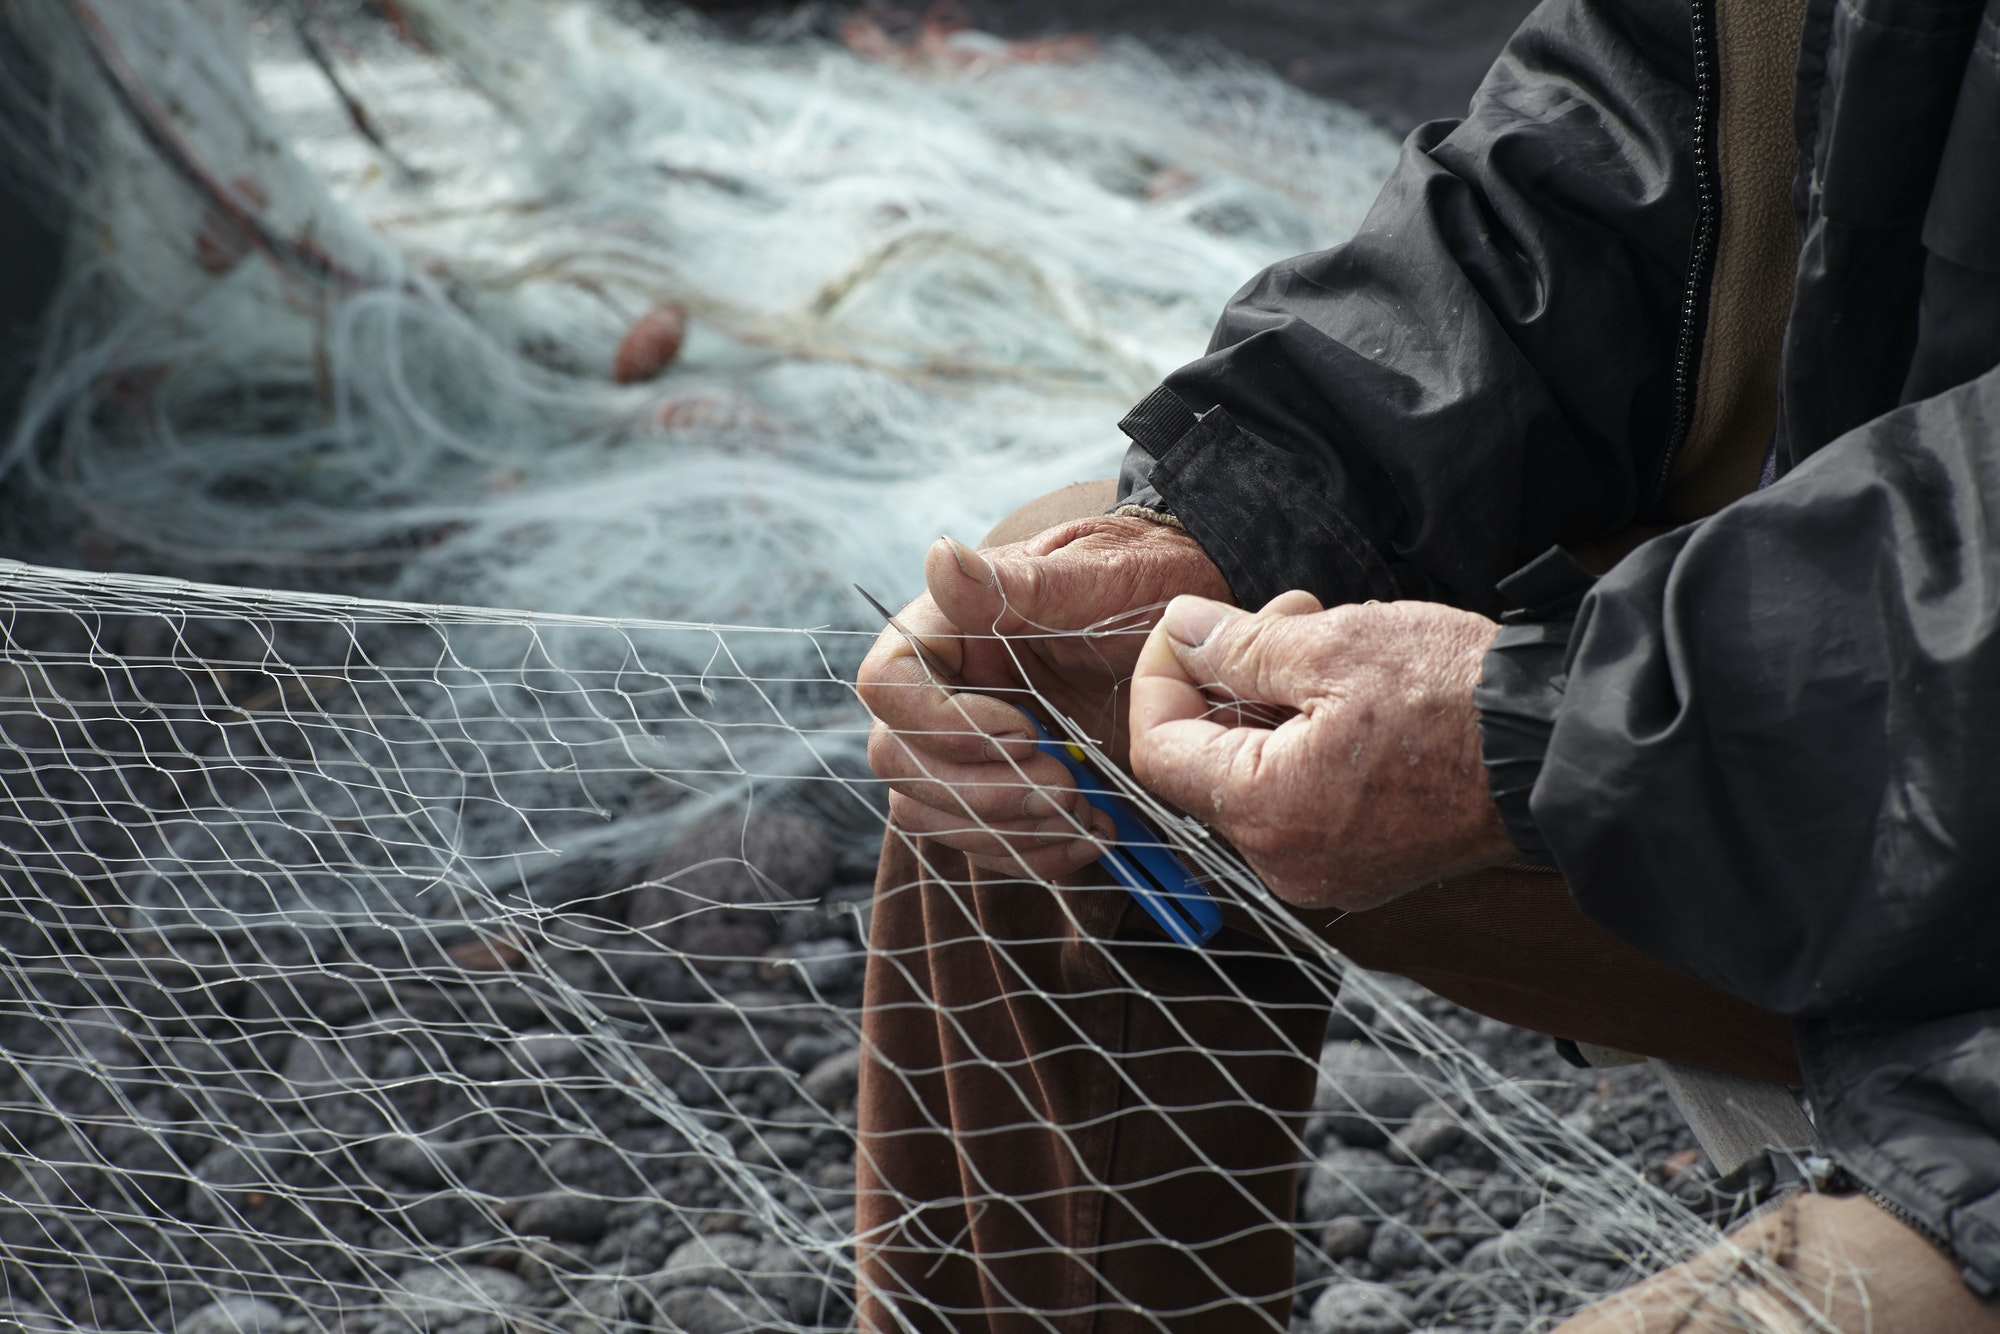 Fisherman repairing net on pebble beach